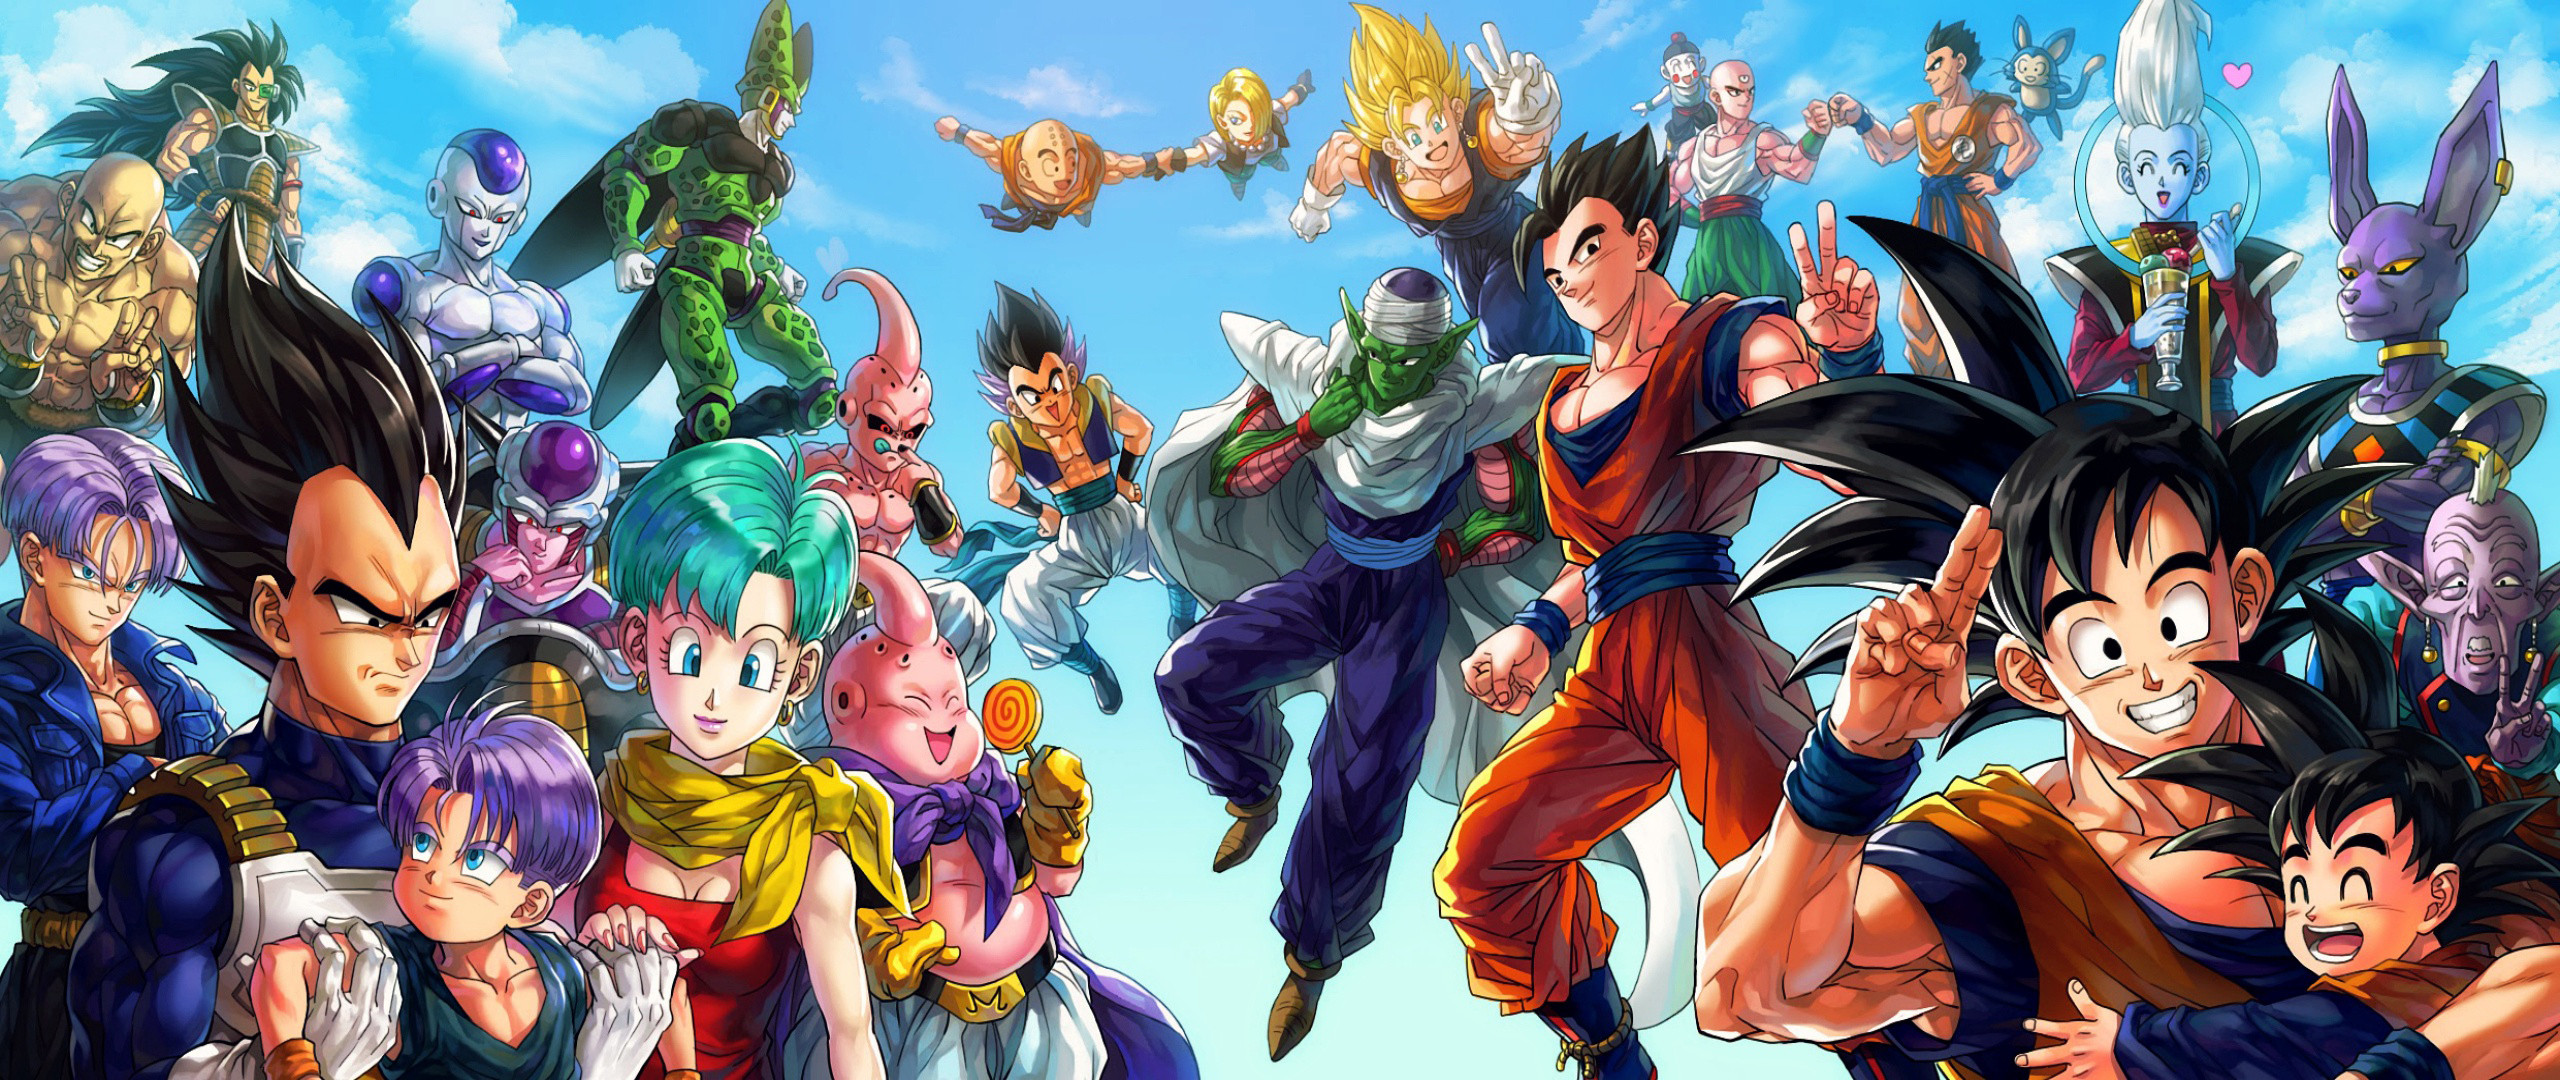 Cell Dragon Ball Z Freeza Gohan Goku Piccolo Raditz Trunks Vegeta HD Wallpaper Background ID647552